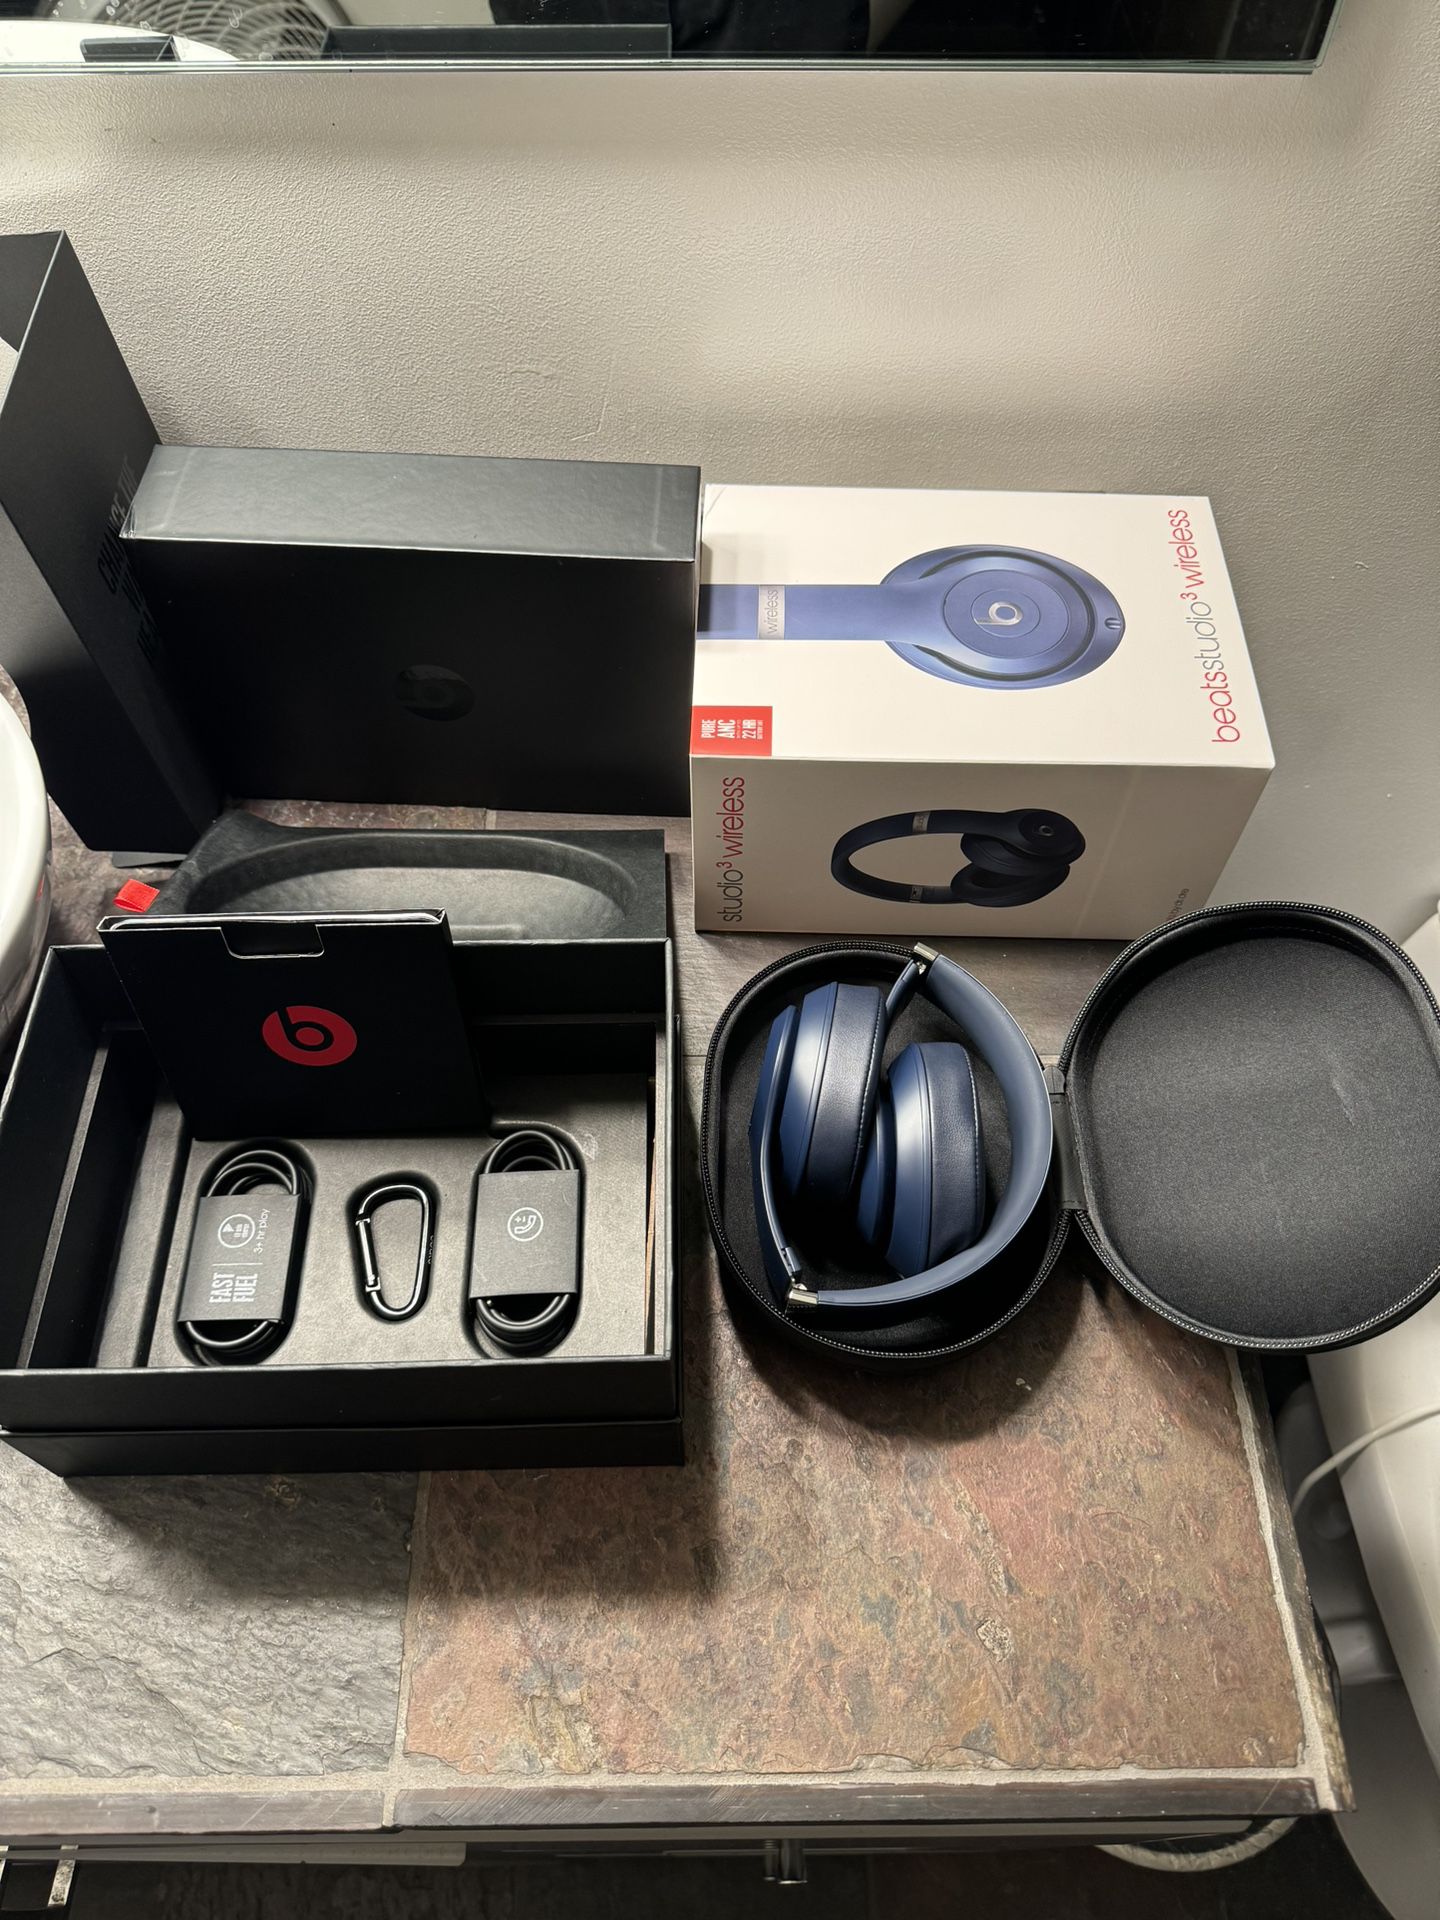 (New) Studio 3 Beat Wireless Headphones, Color Blue, Size small